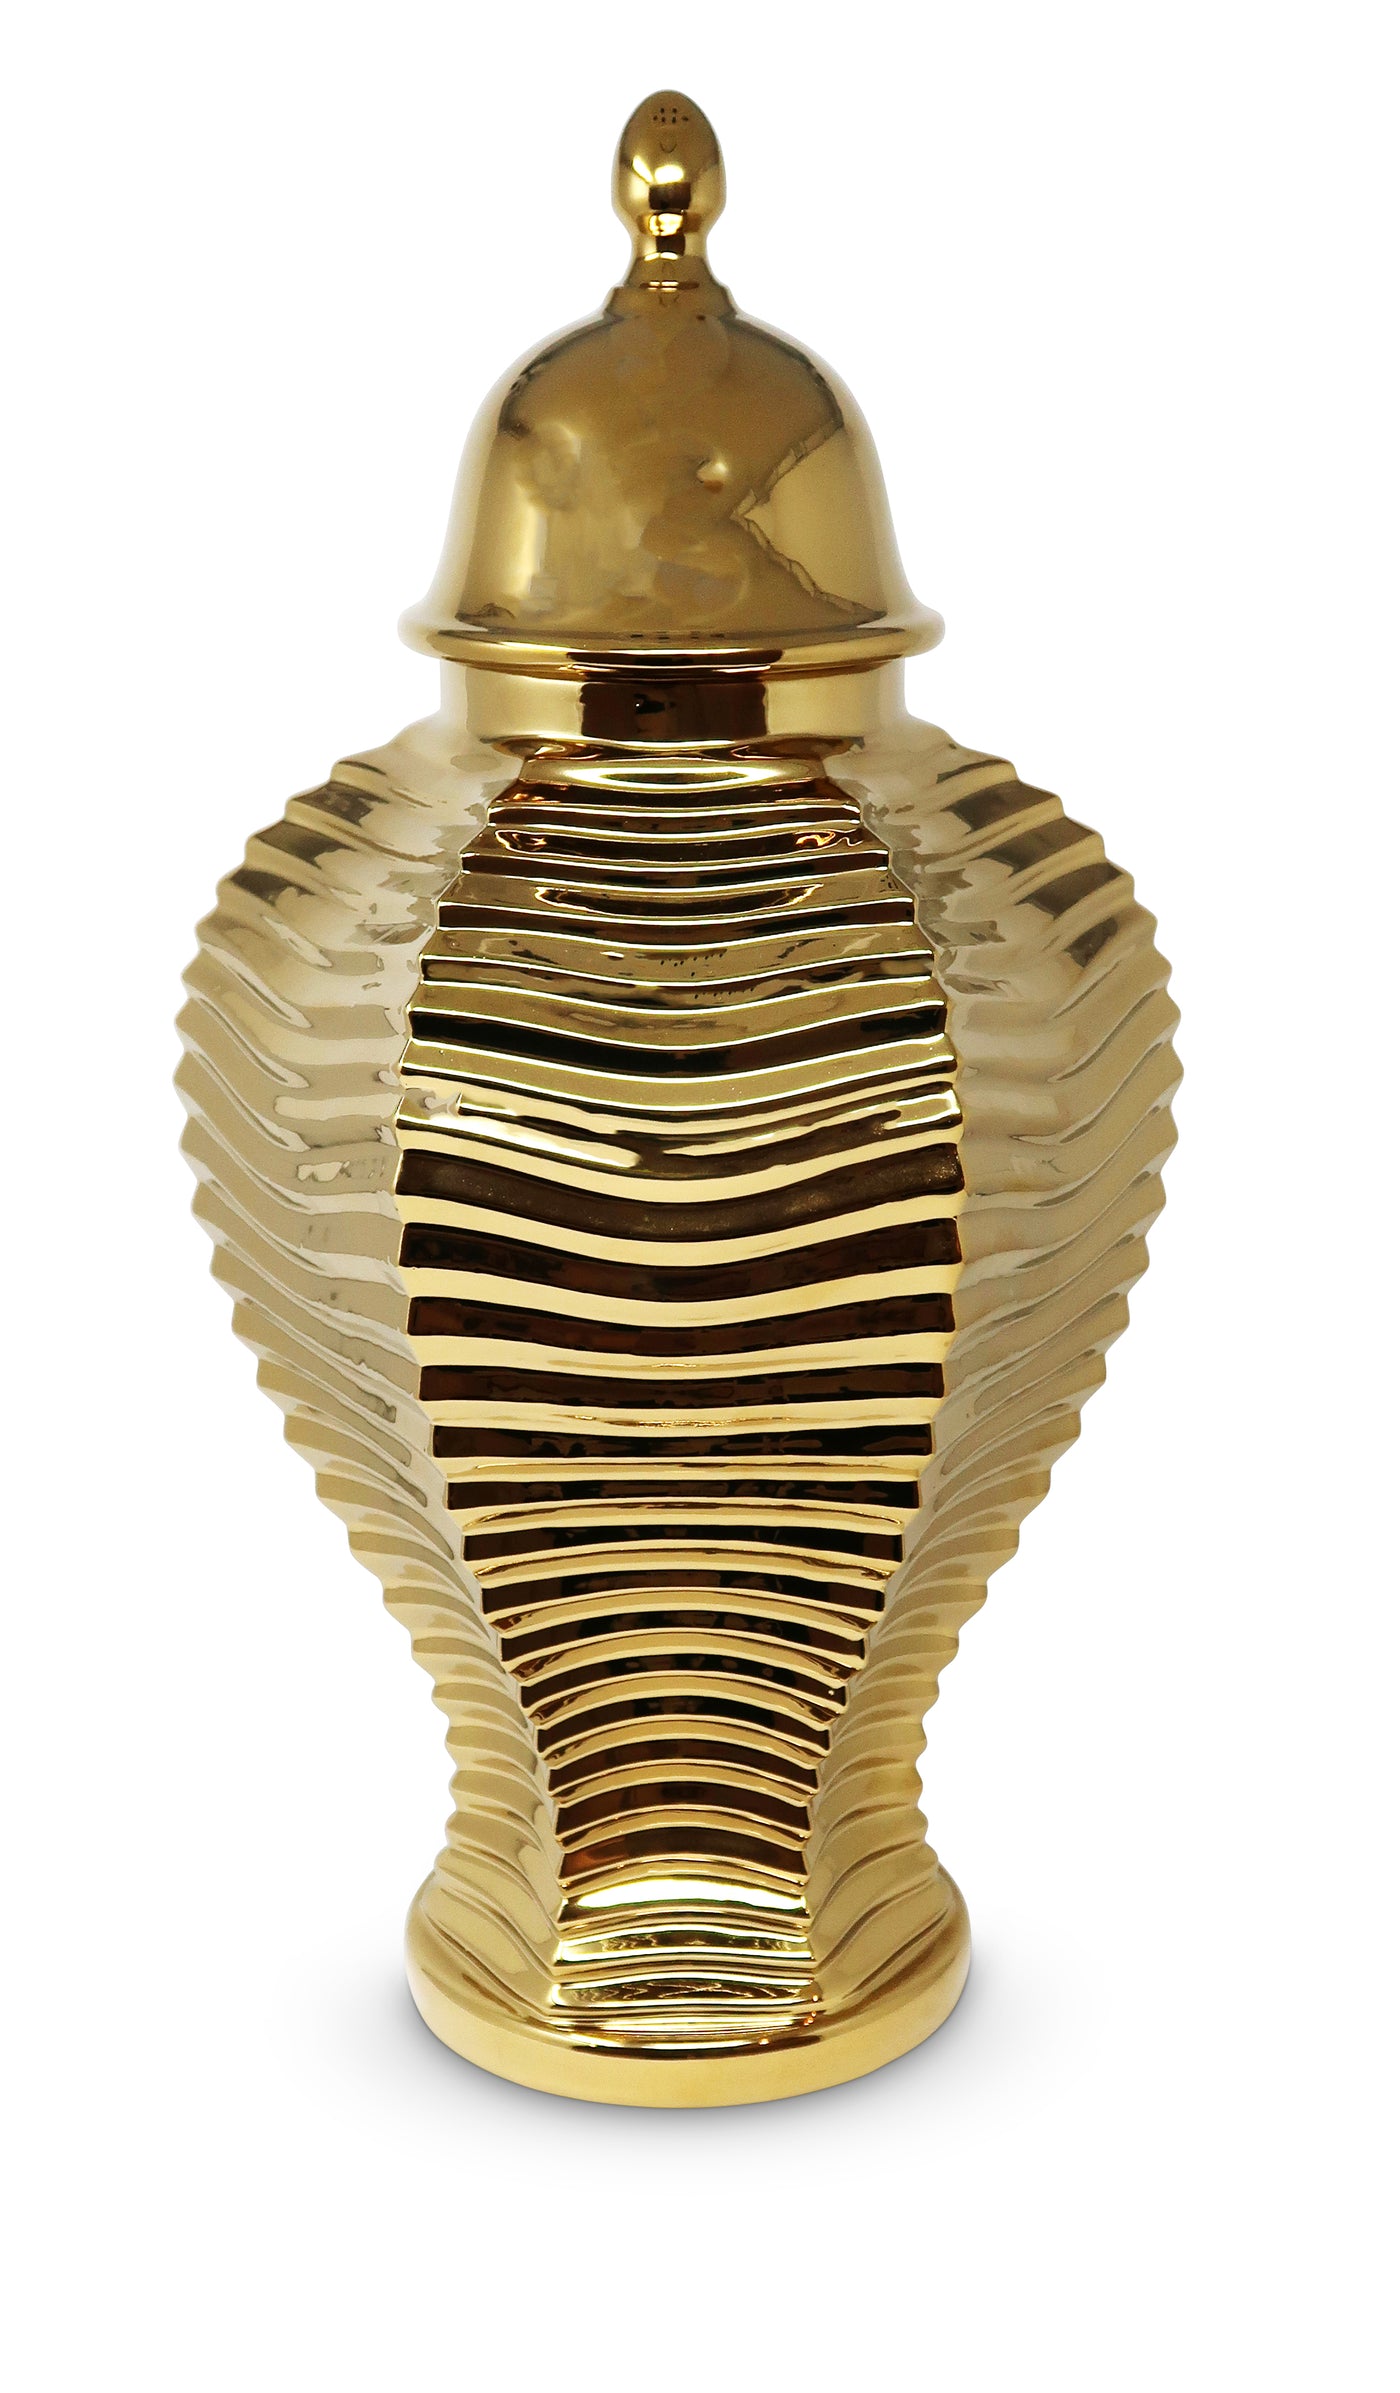 Gold Ginger Jar with Pleat Design